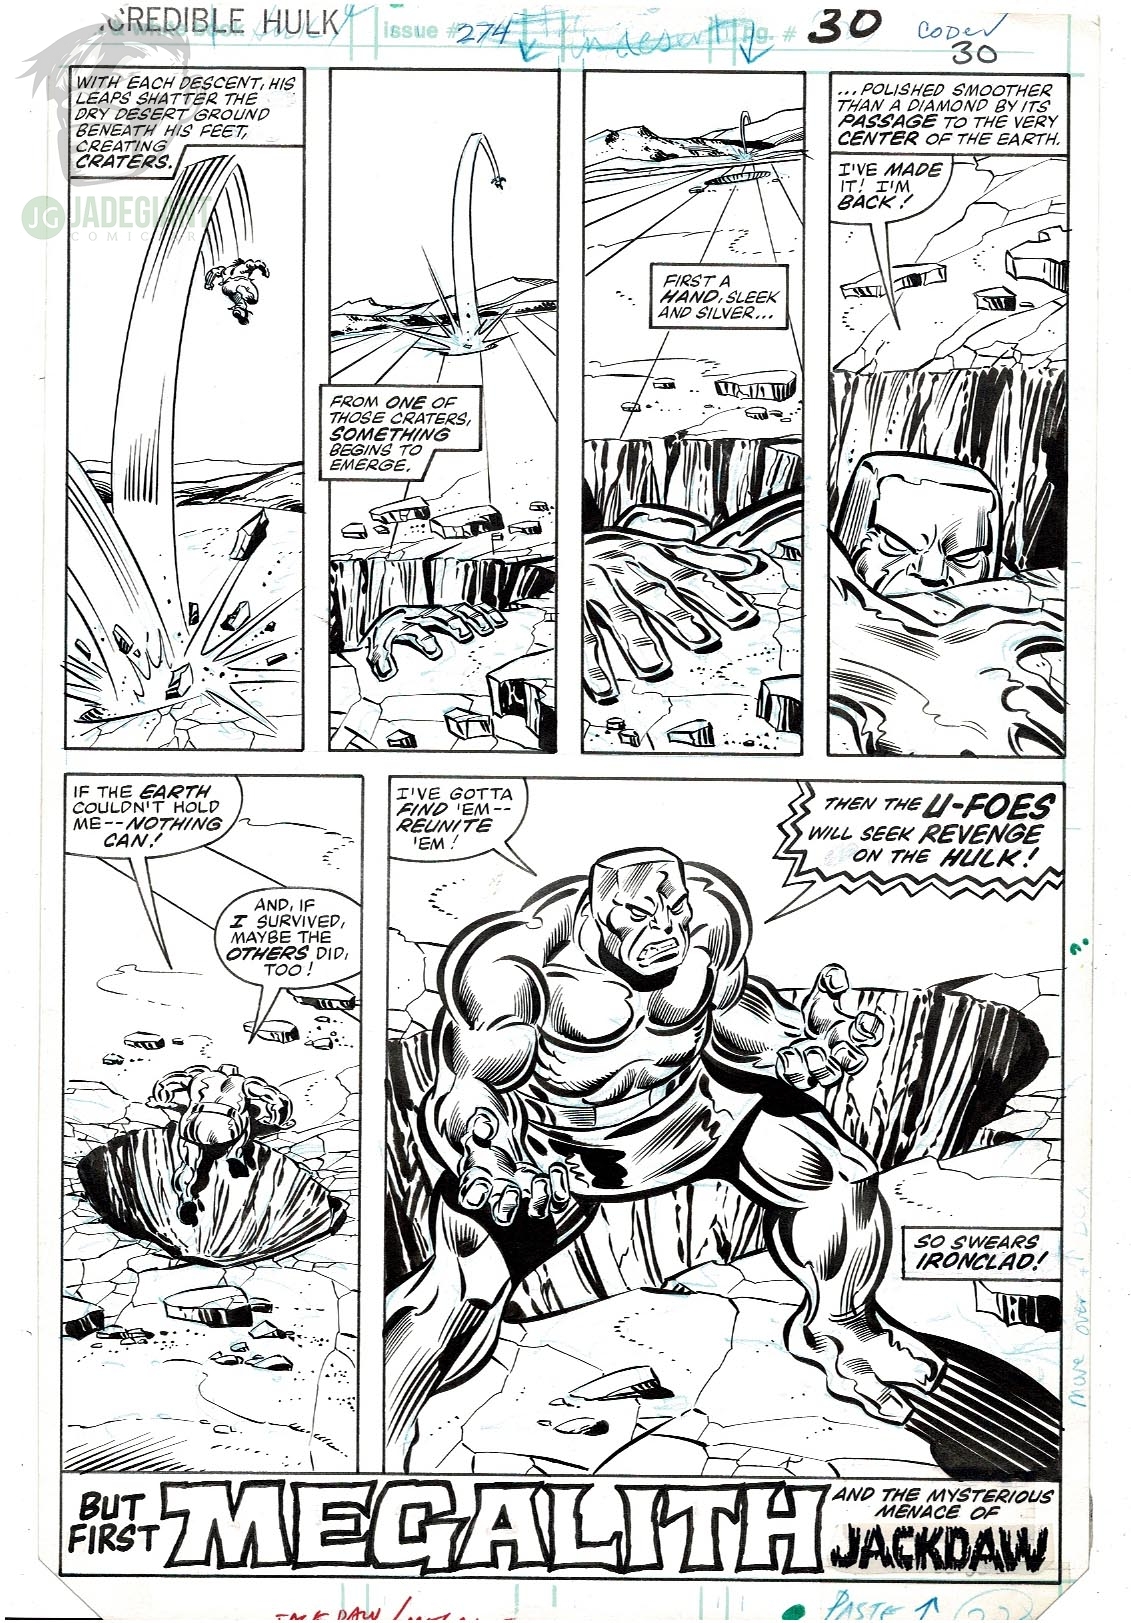 1982 Incredible Hulk 274 page 30 by Sal Buscema and Joe Sinnott enter the U-FOES! Comic Art